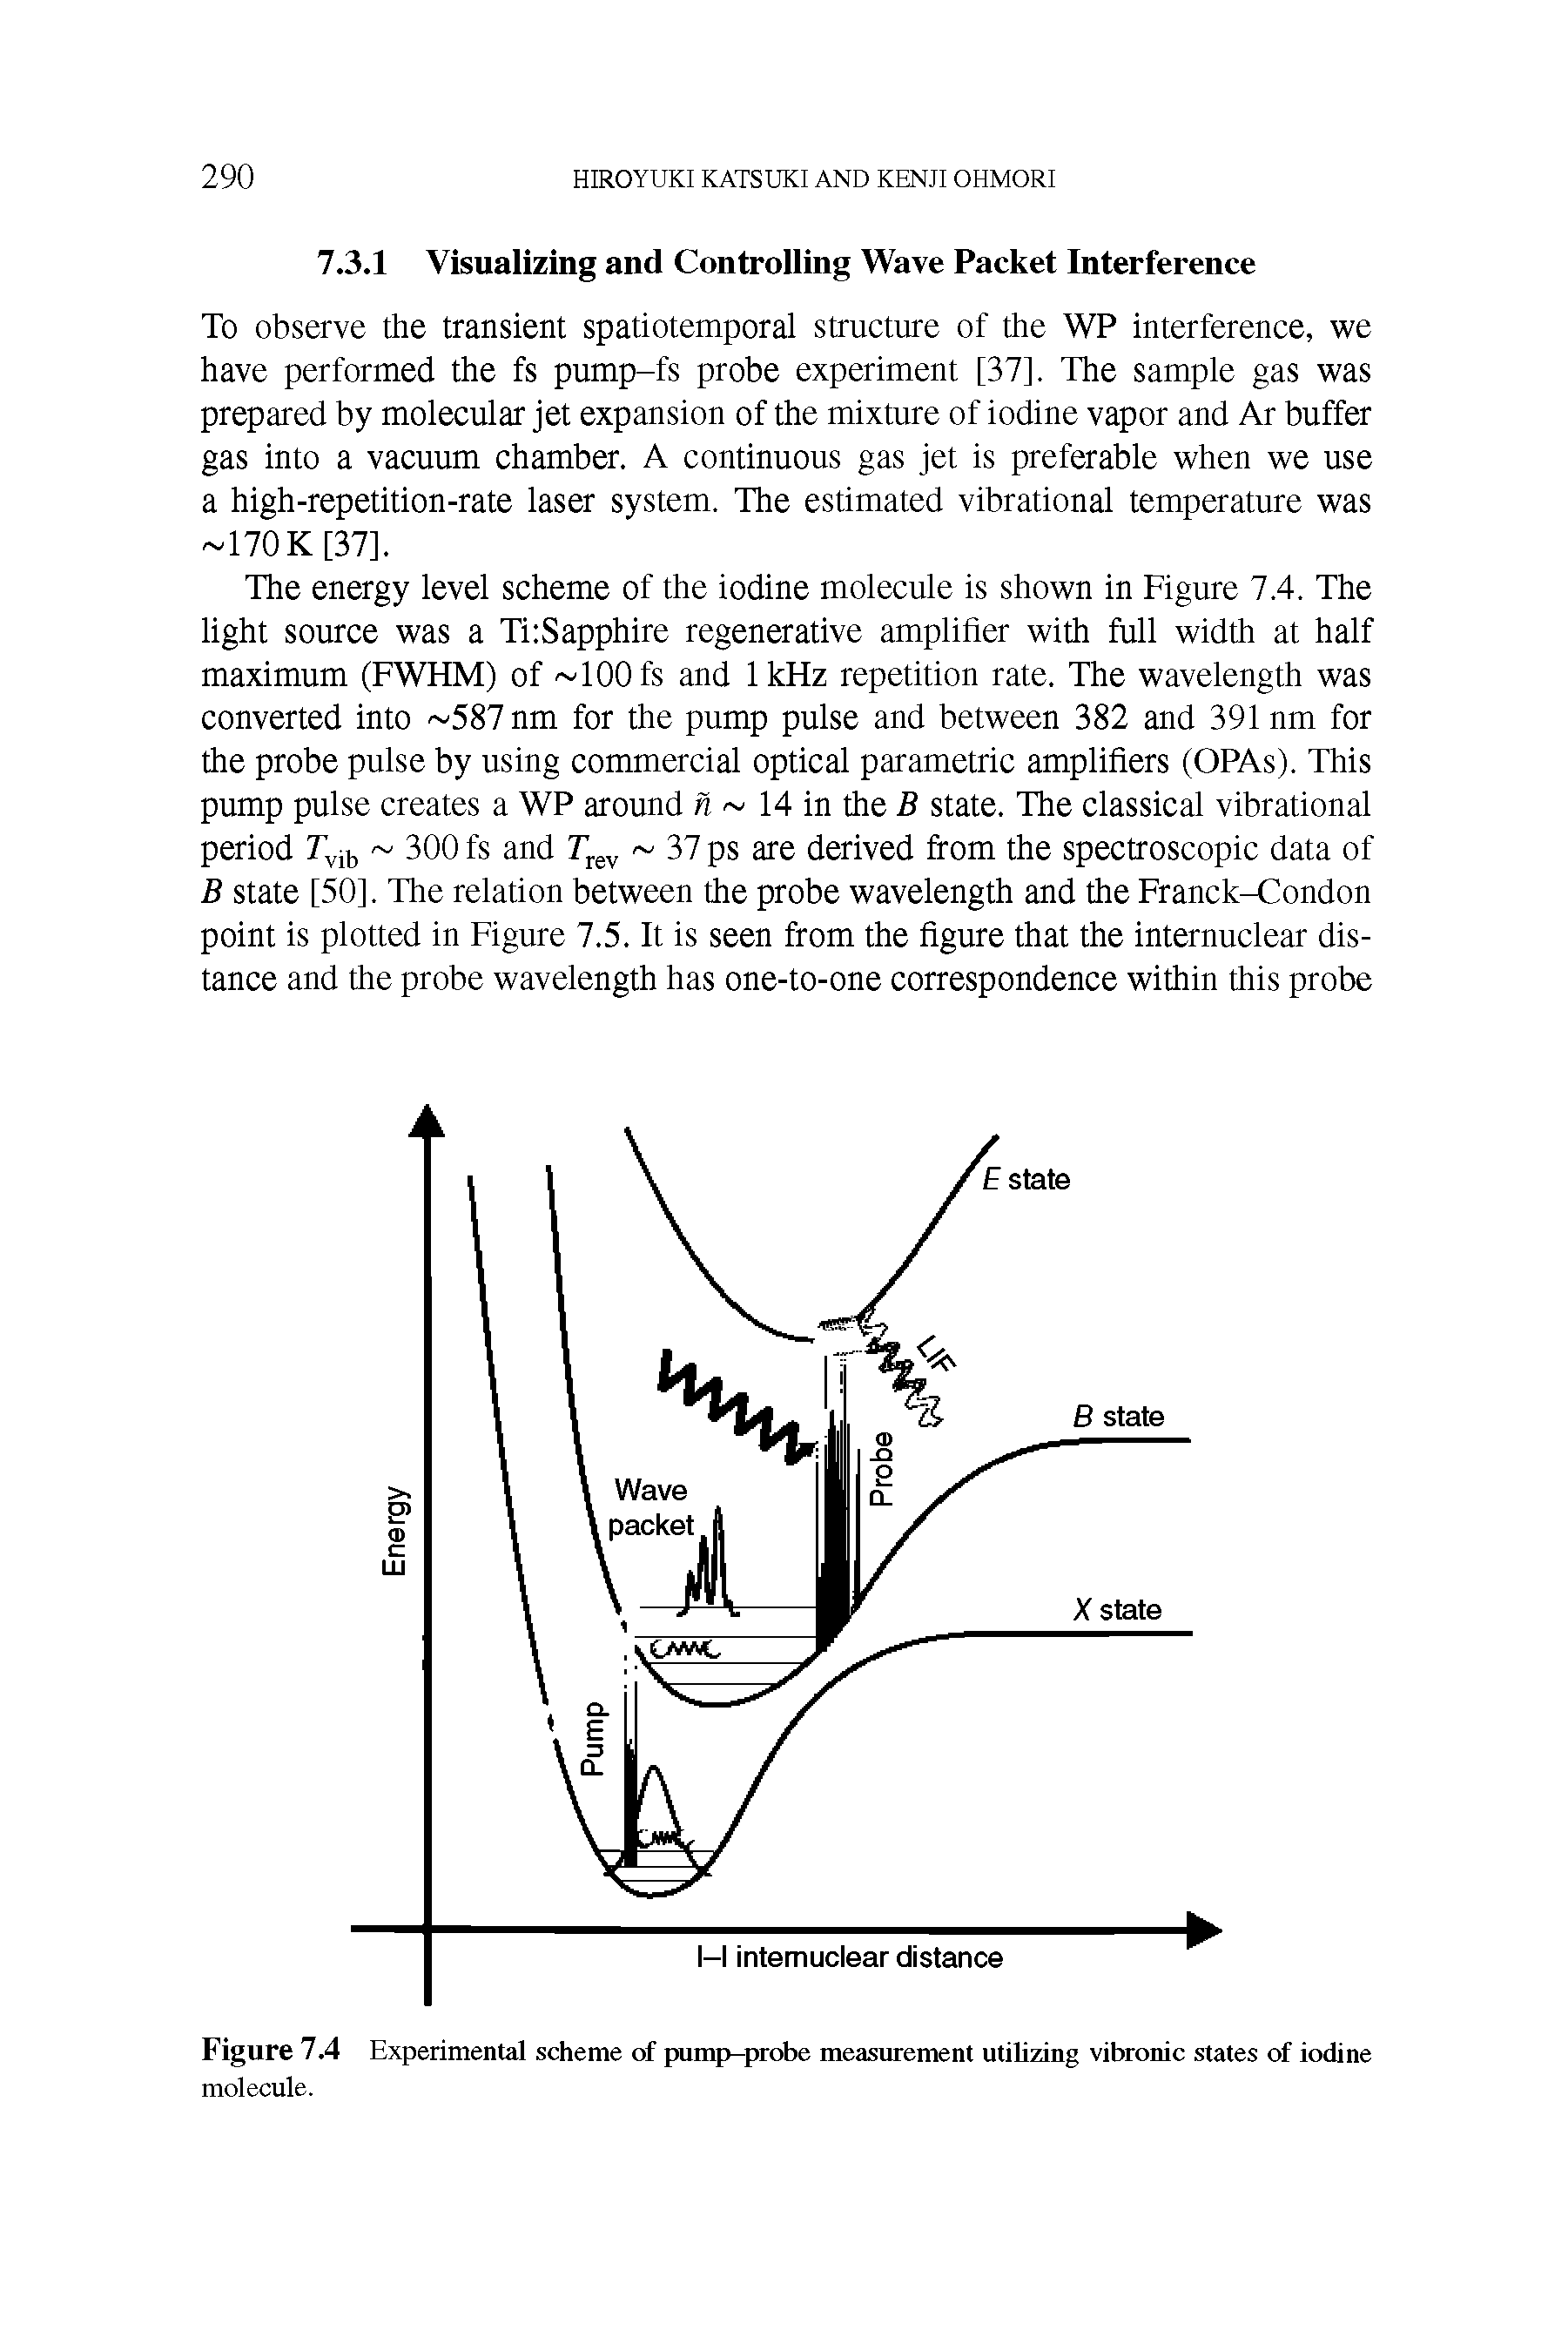 Figure 7.4 Experimental scheme of pump-probe measurement utilizing vibronic states of iodine molecule.